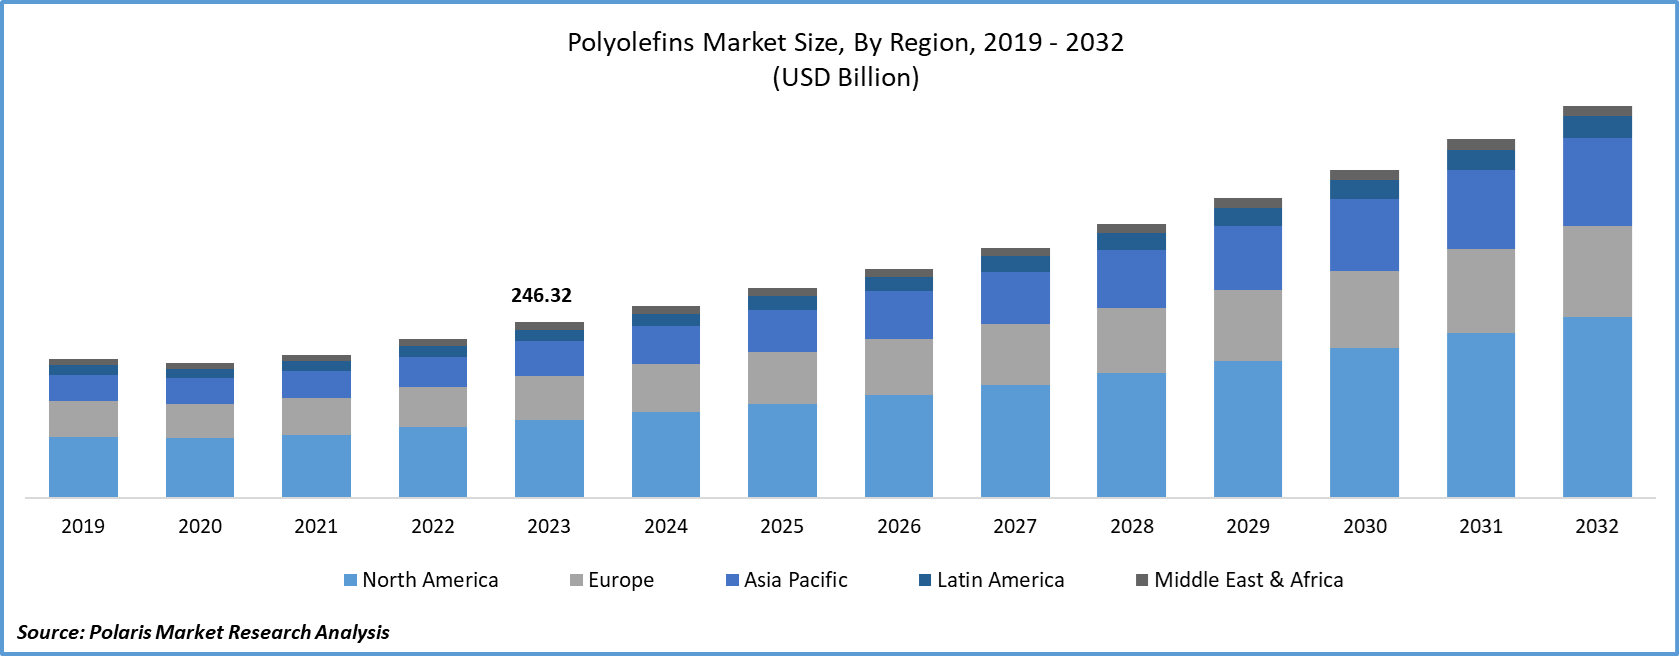 Polyolefins Market Size By Region